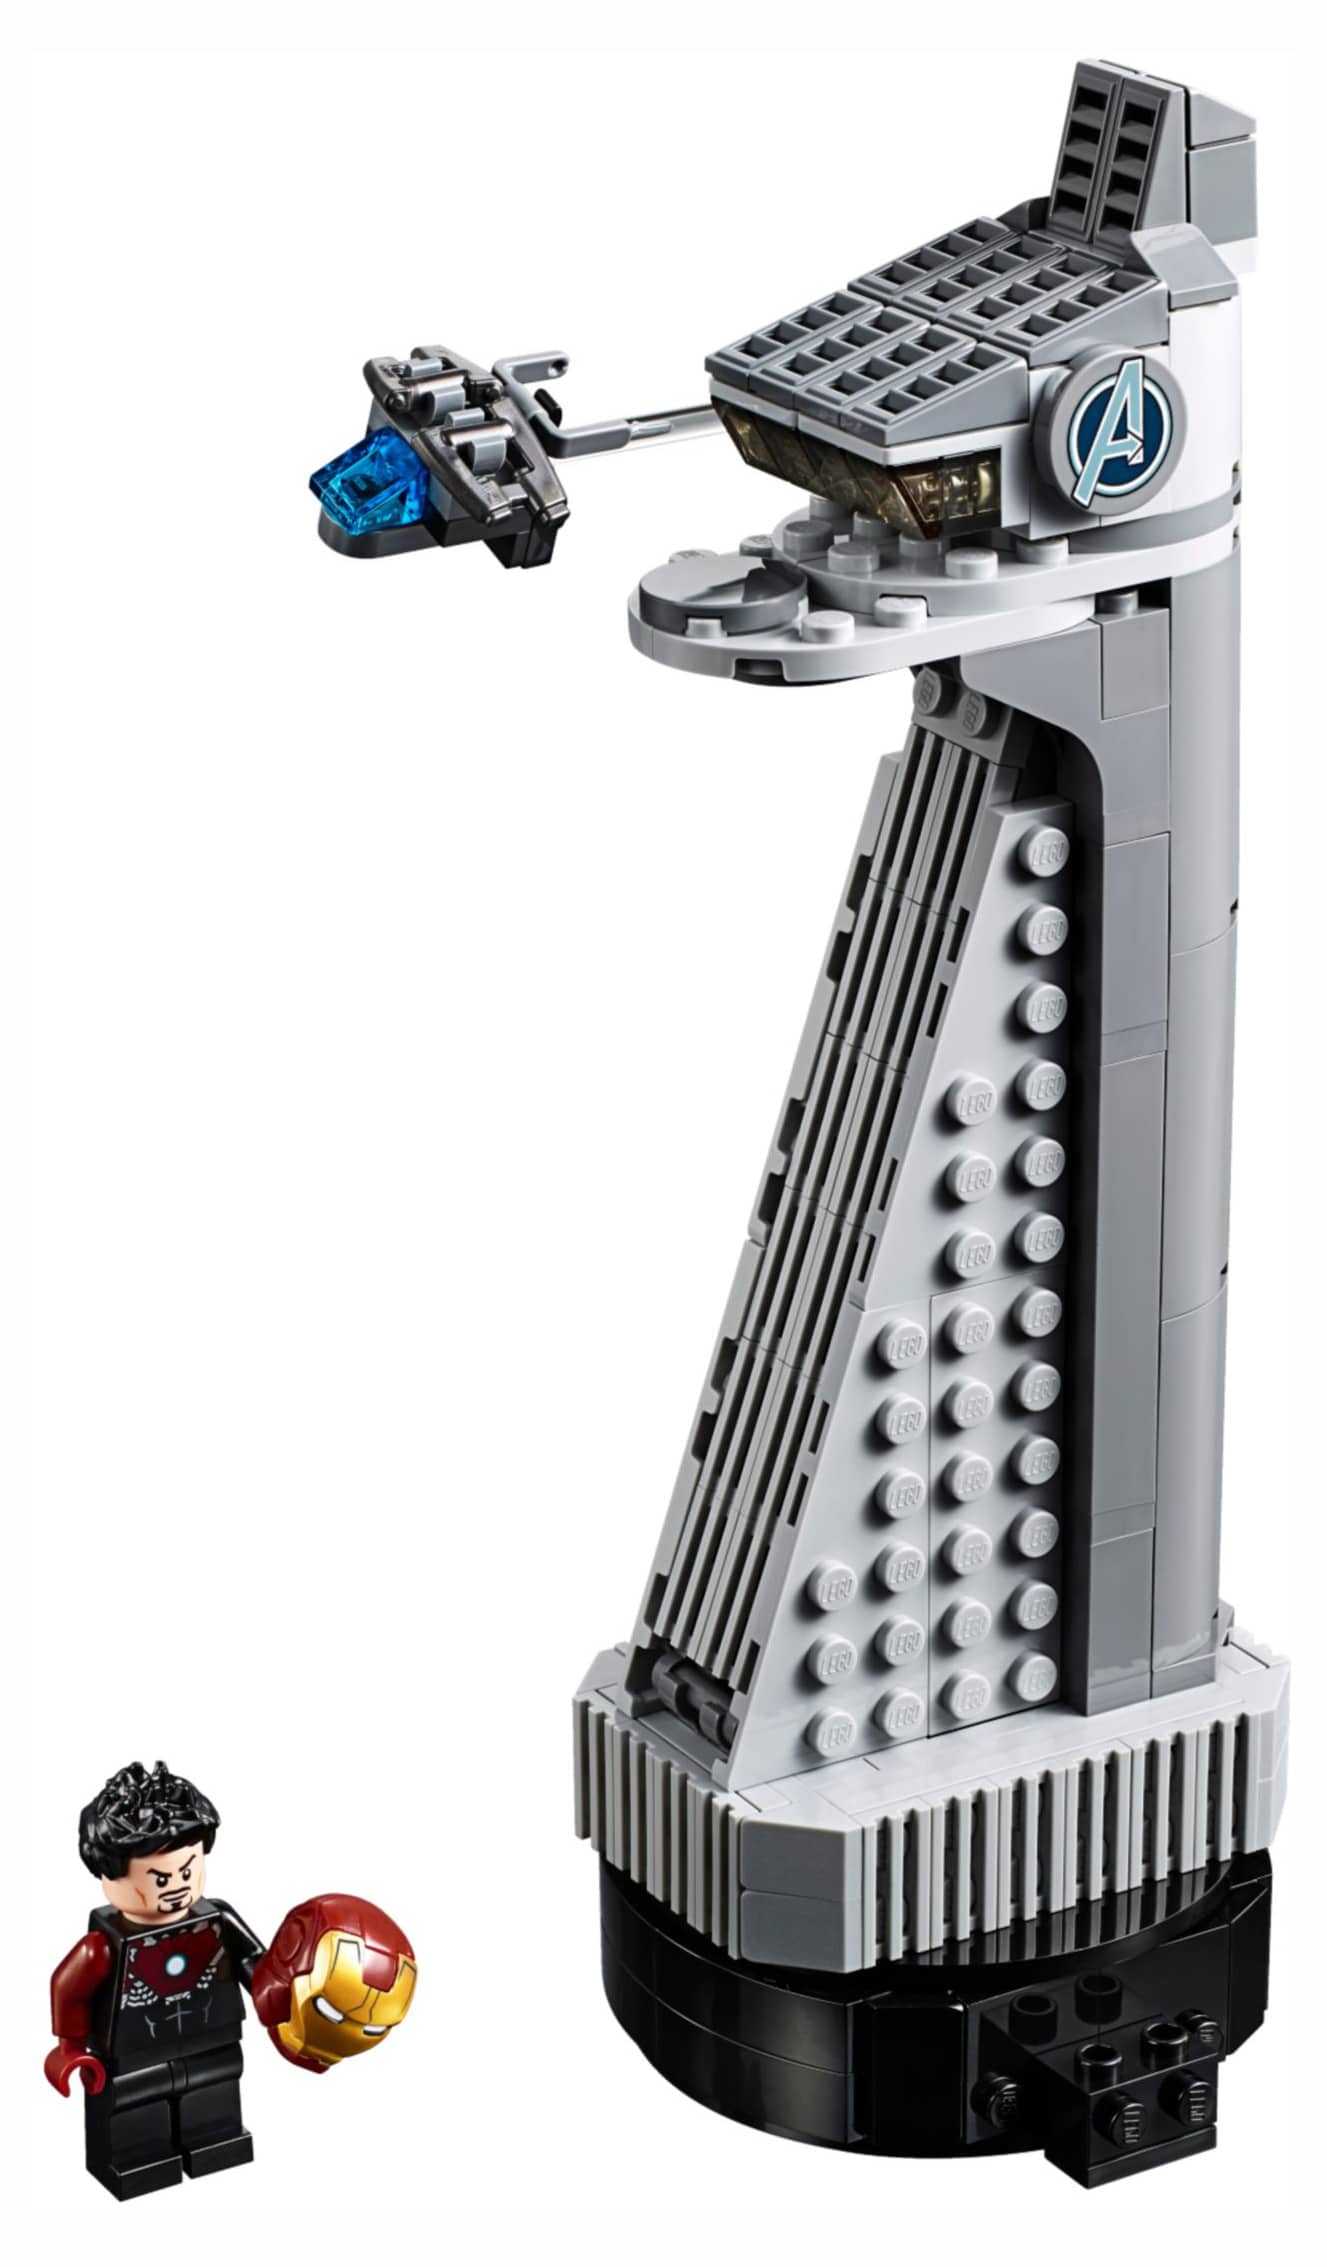 LEGO 40334 Avengers Tower